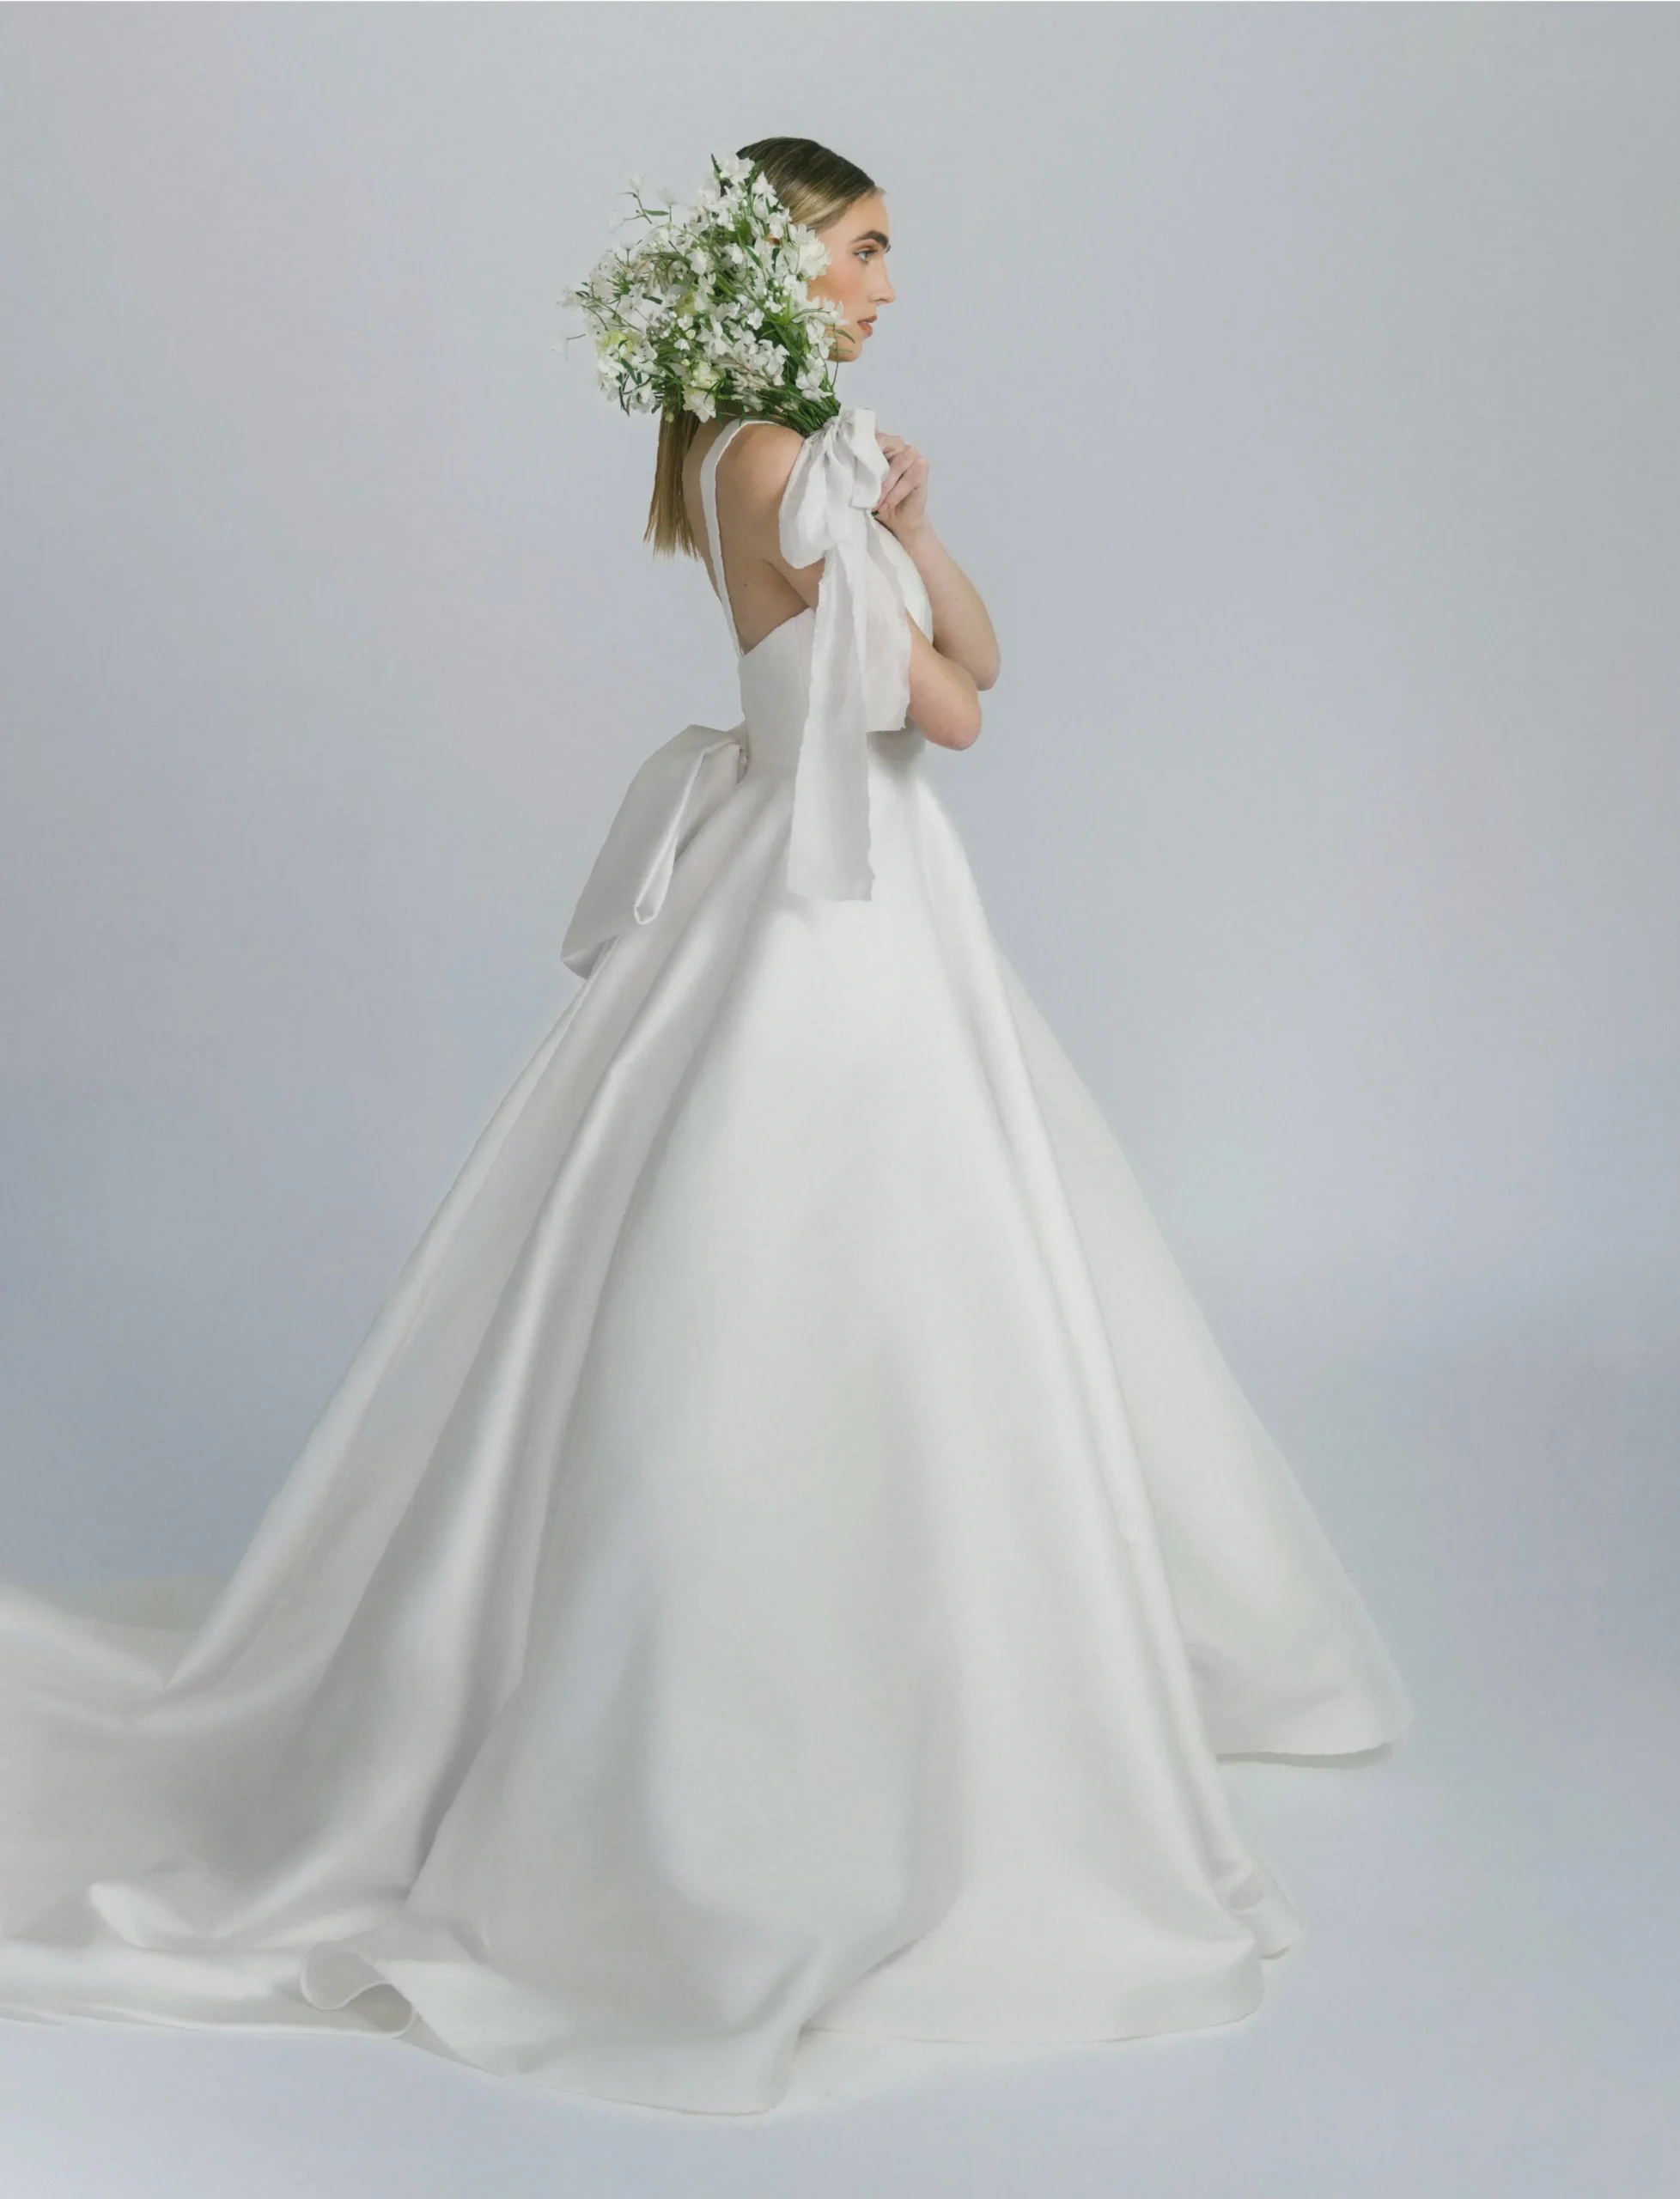 Bride holding bouquet, back of open wedding dress.